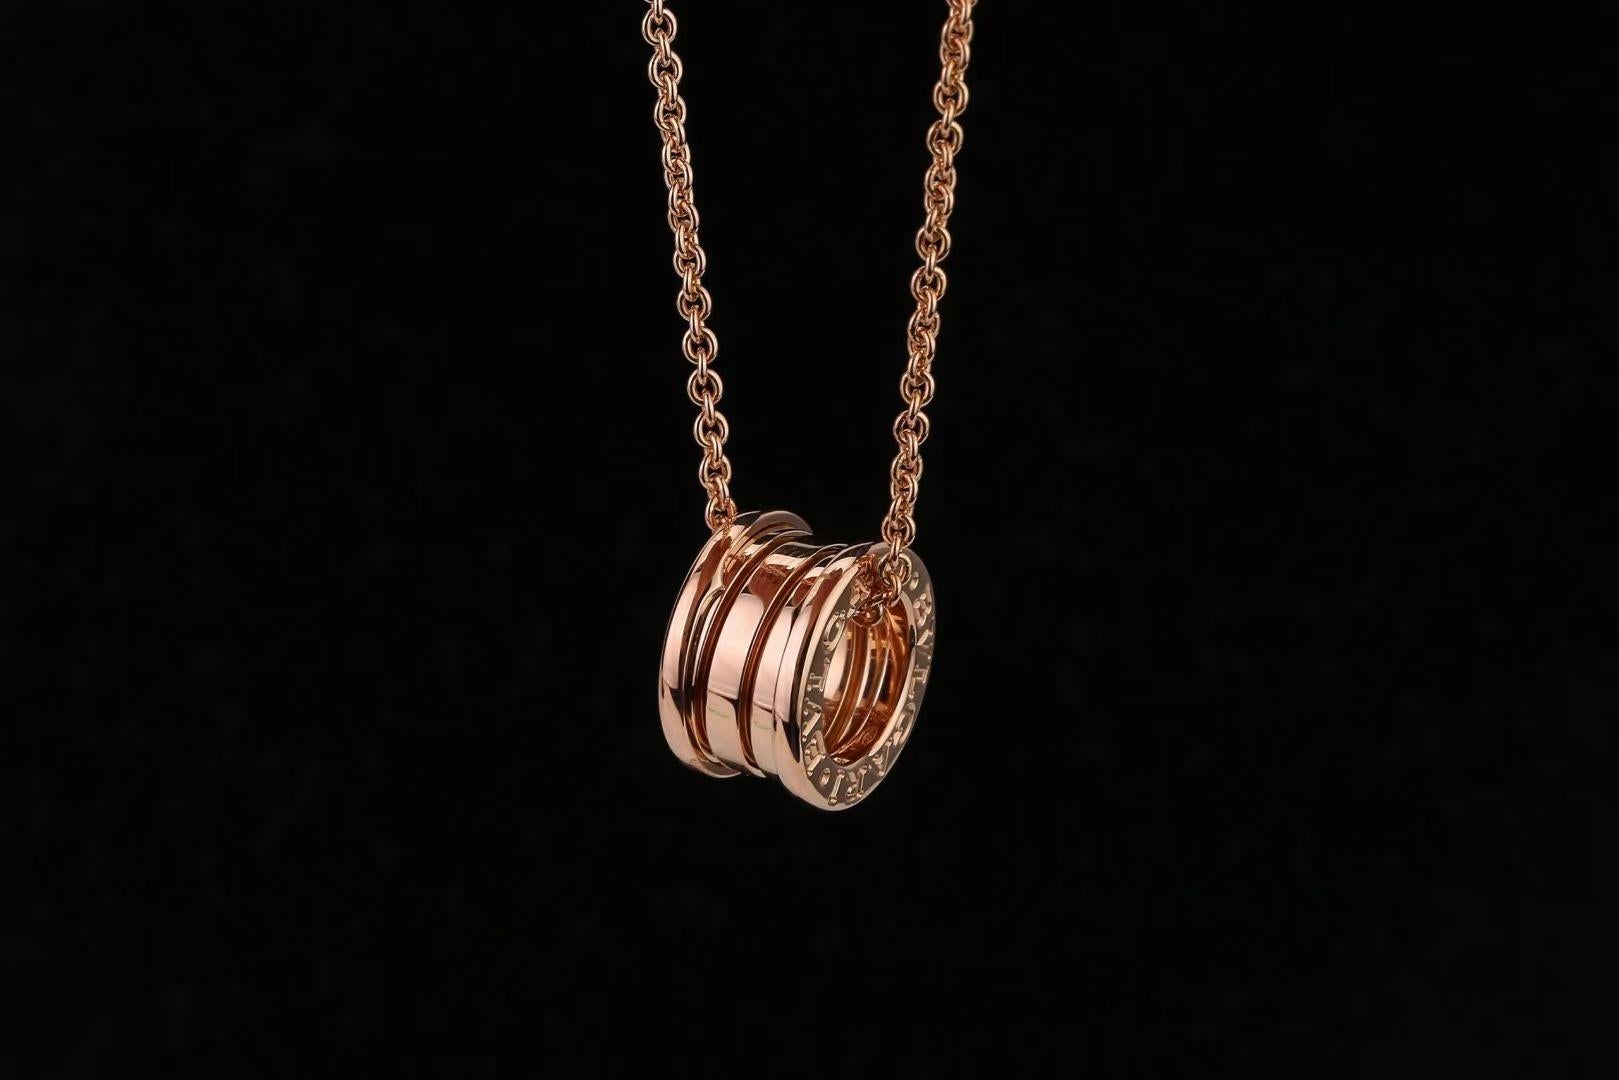 bvlgari necklace 18k gold